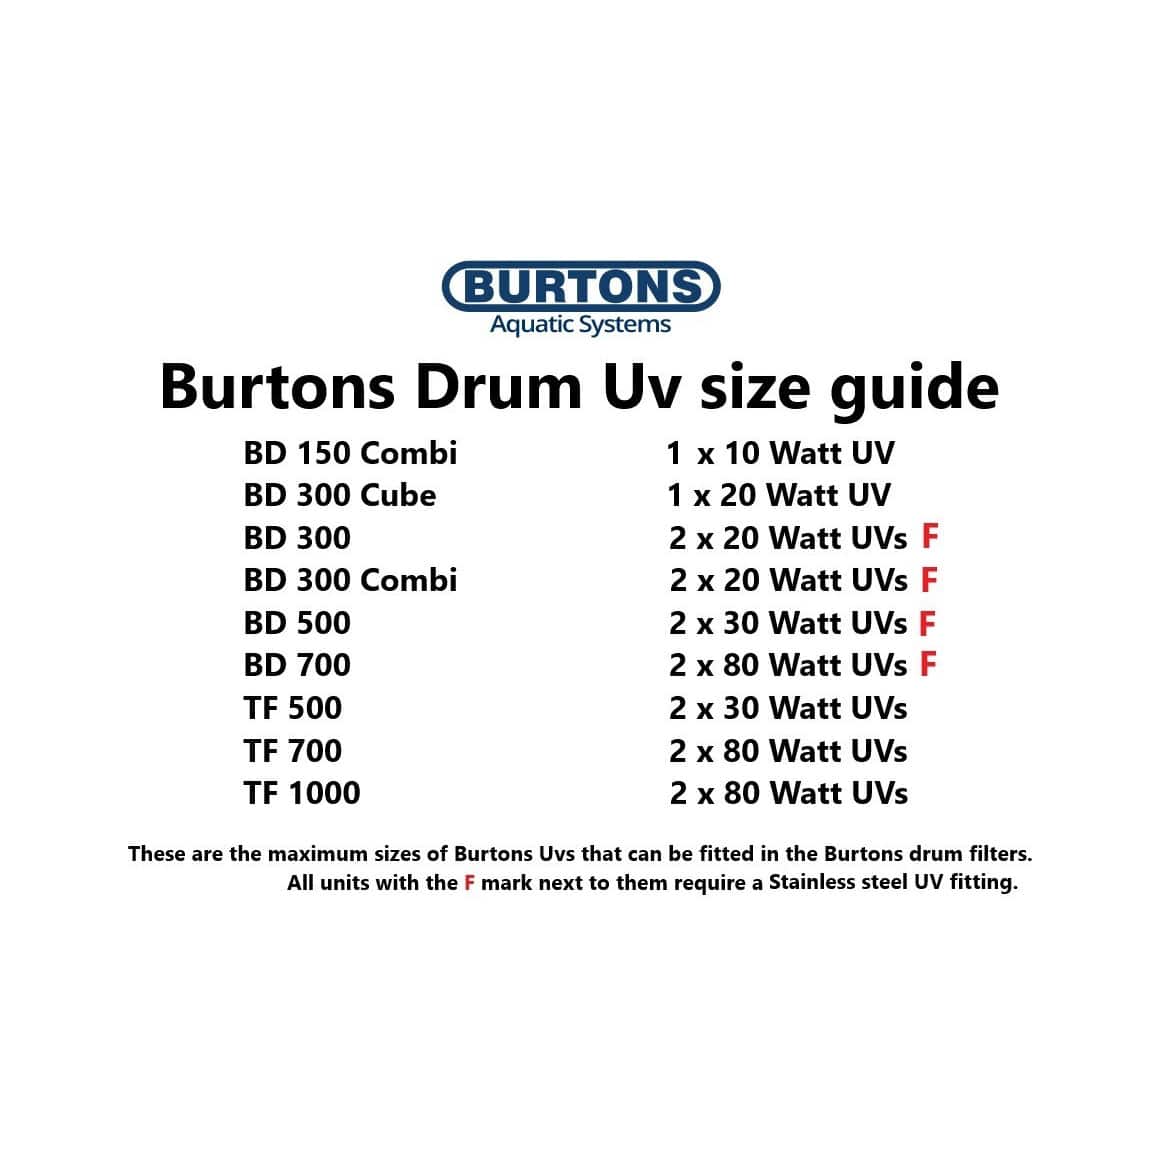 burtons_drum-uv_size_guide_5